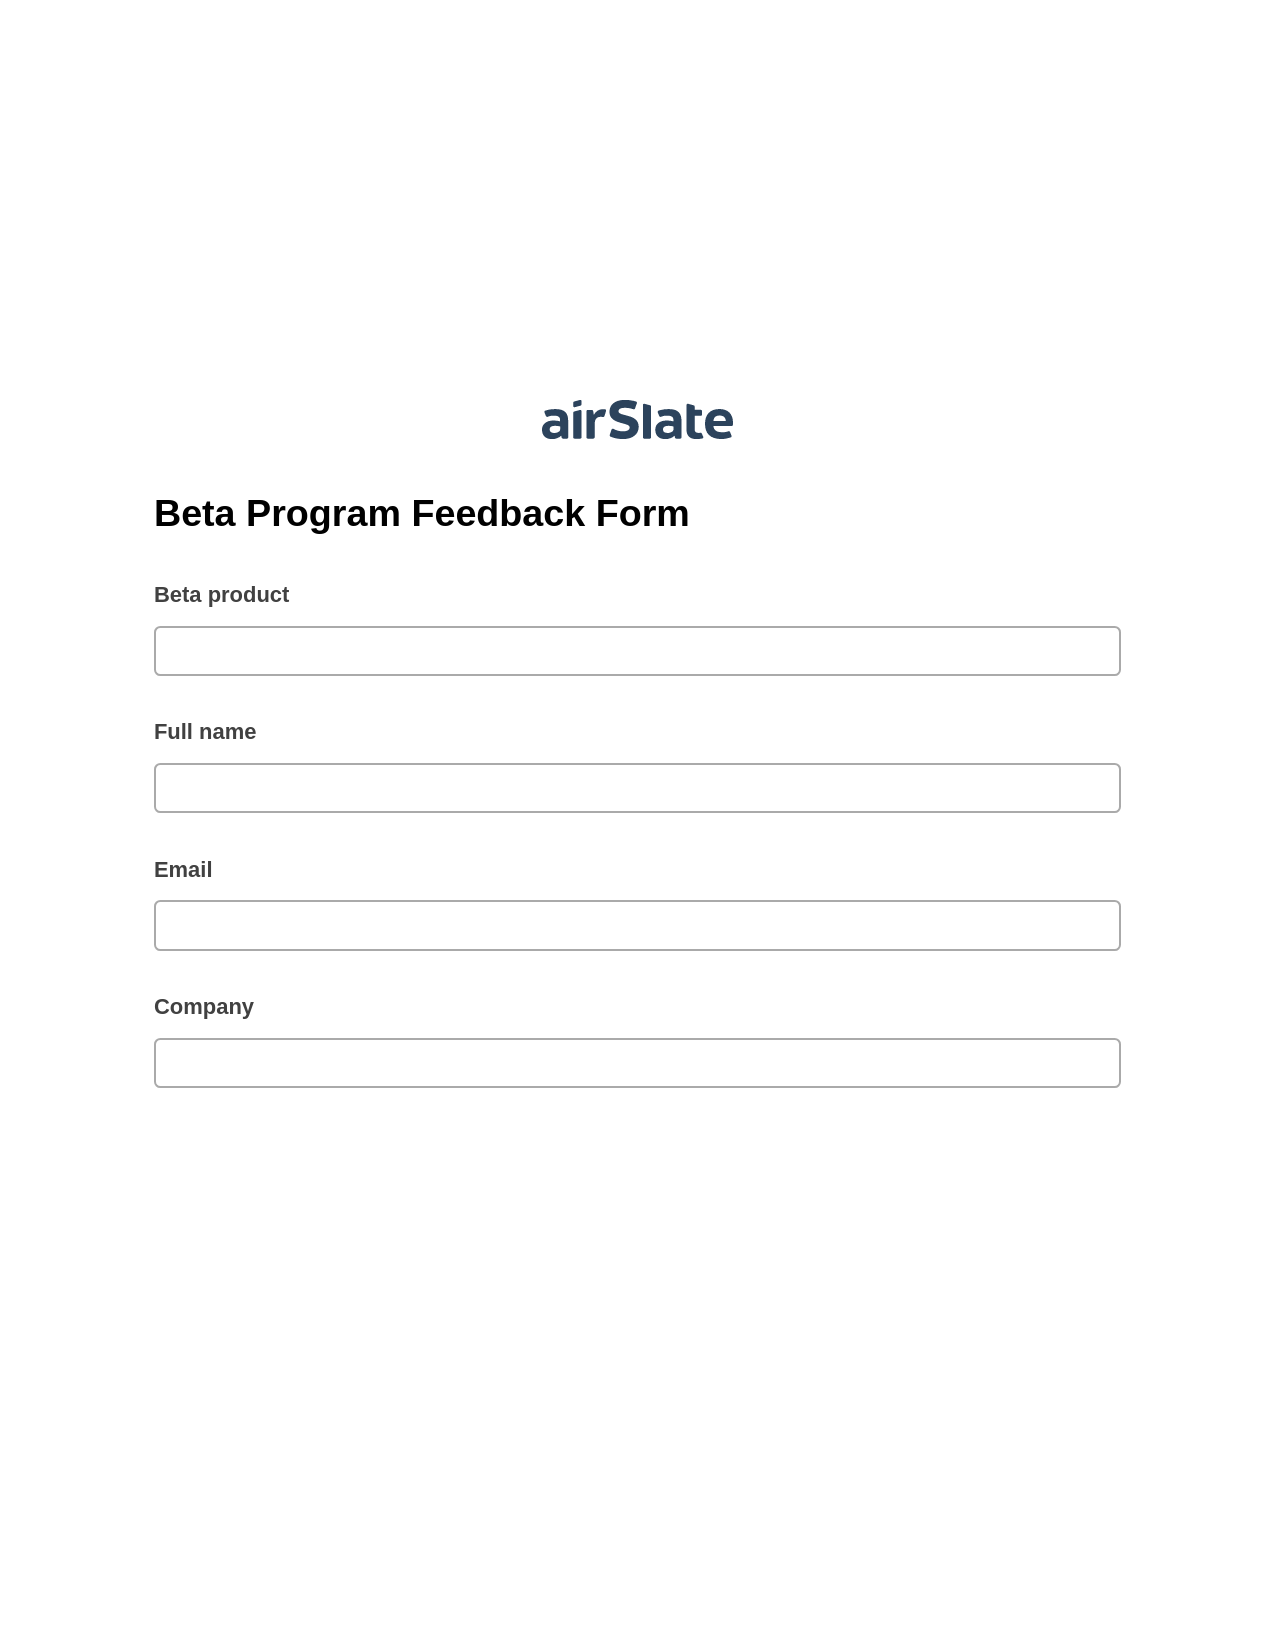 Multirole Beta Program Feedback Form Pre-fill from CSV File Bot, Send a Slate to MS Dynamics 365 Contact Bot, Box Bot